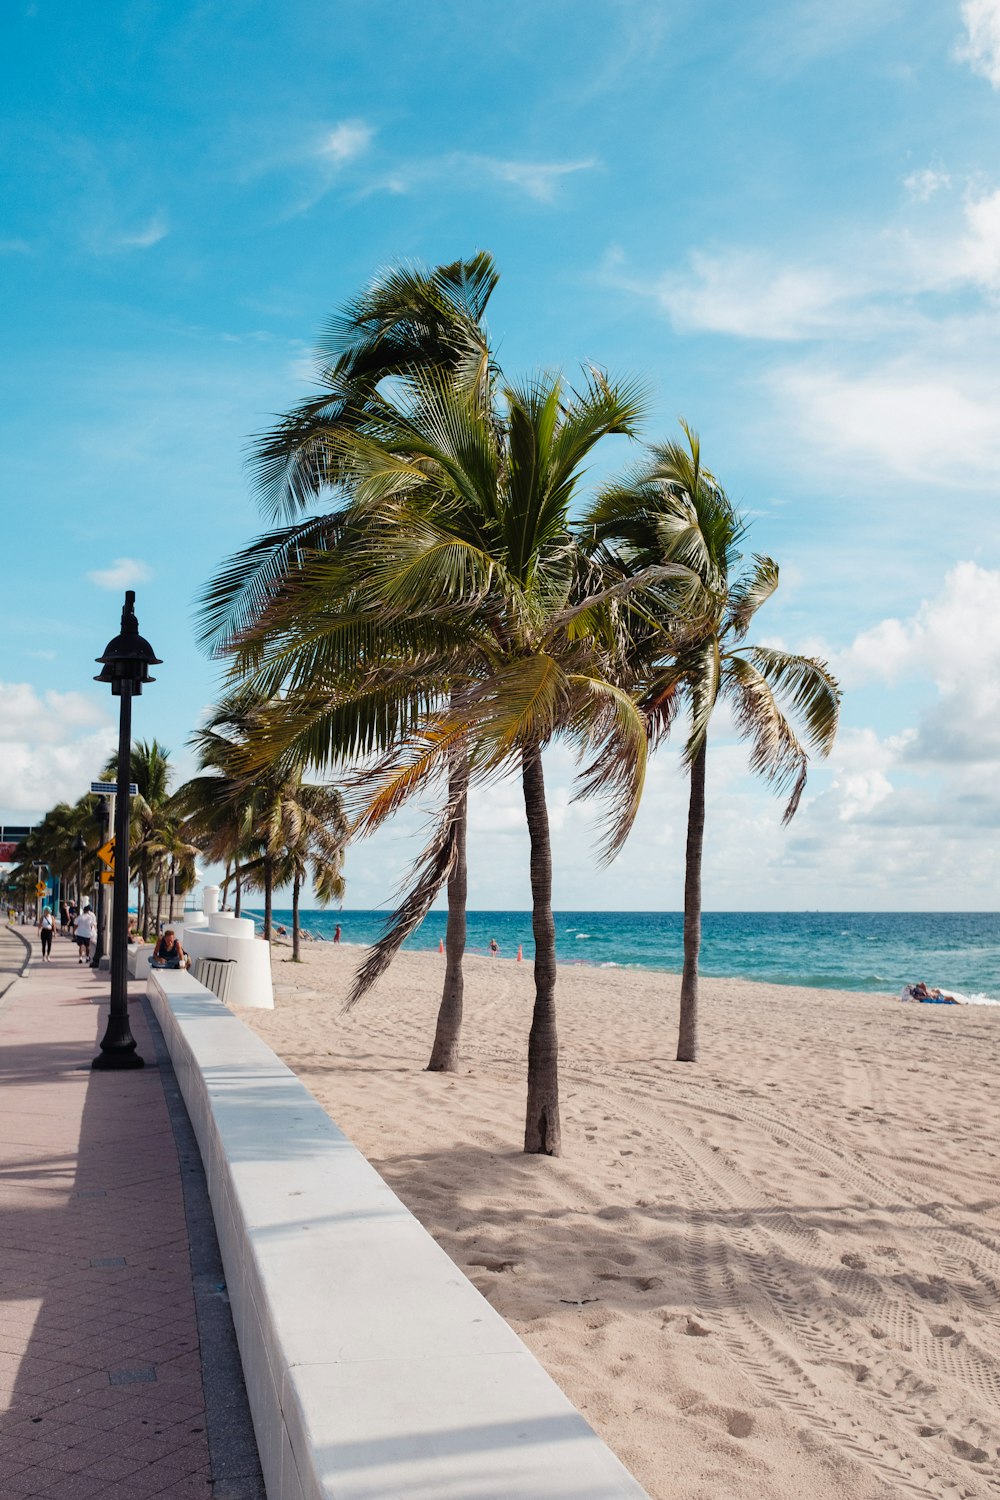 palm trees line a sidewalk along the beach